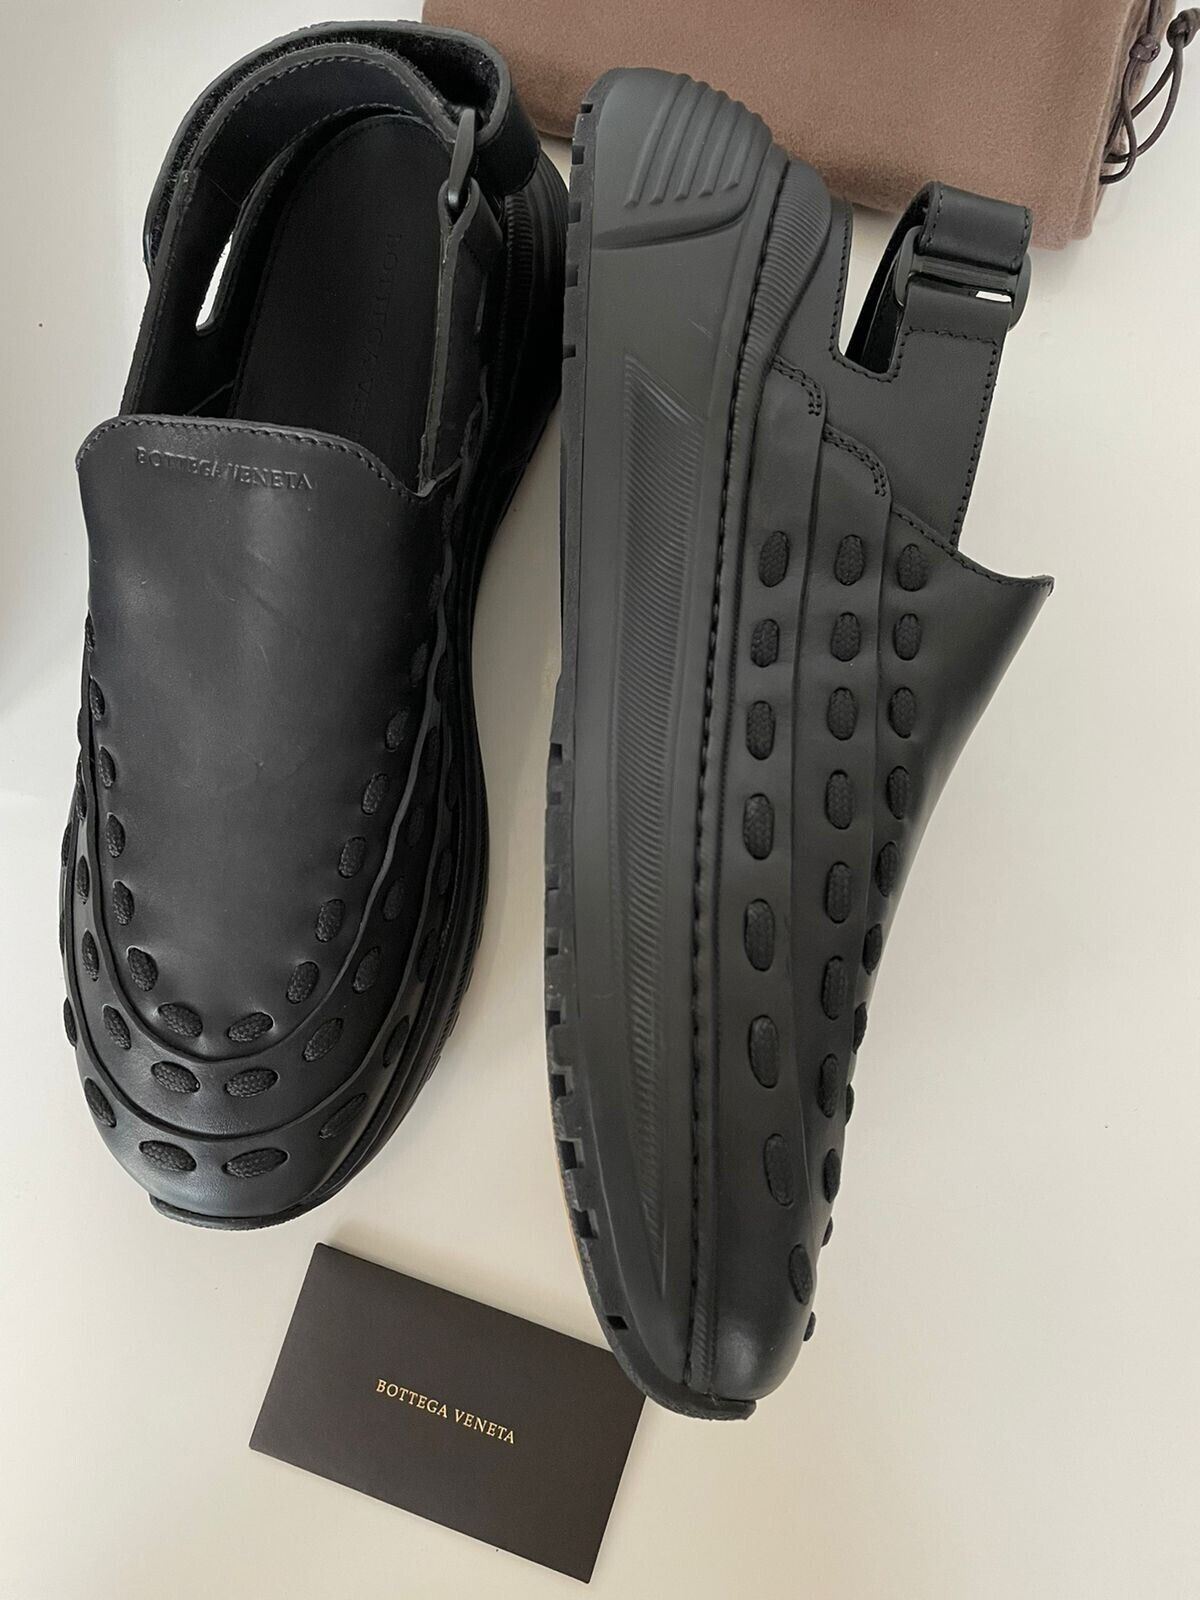 NIB $950 Bottega Veneta Mens Leather Black Sneakers Sandals 11 US (44 Eu) 578304